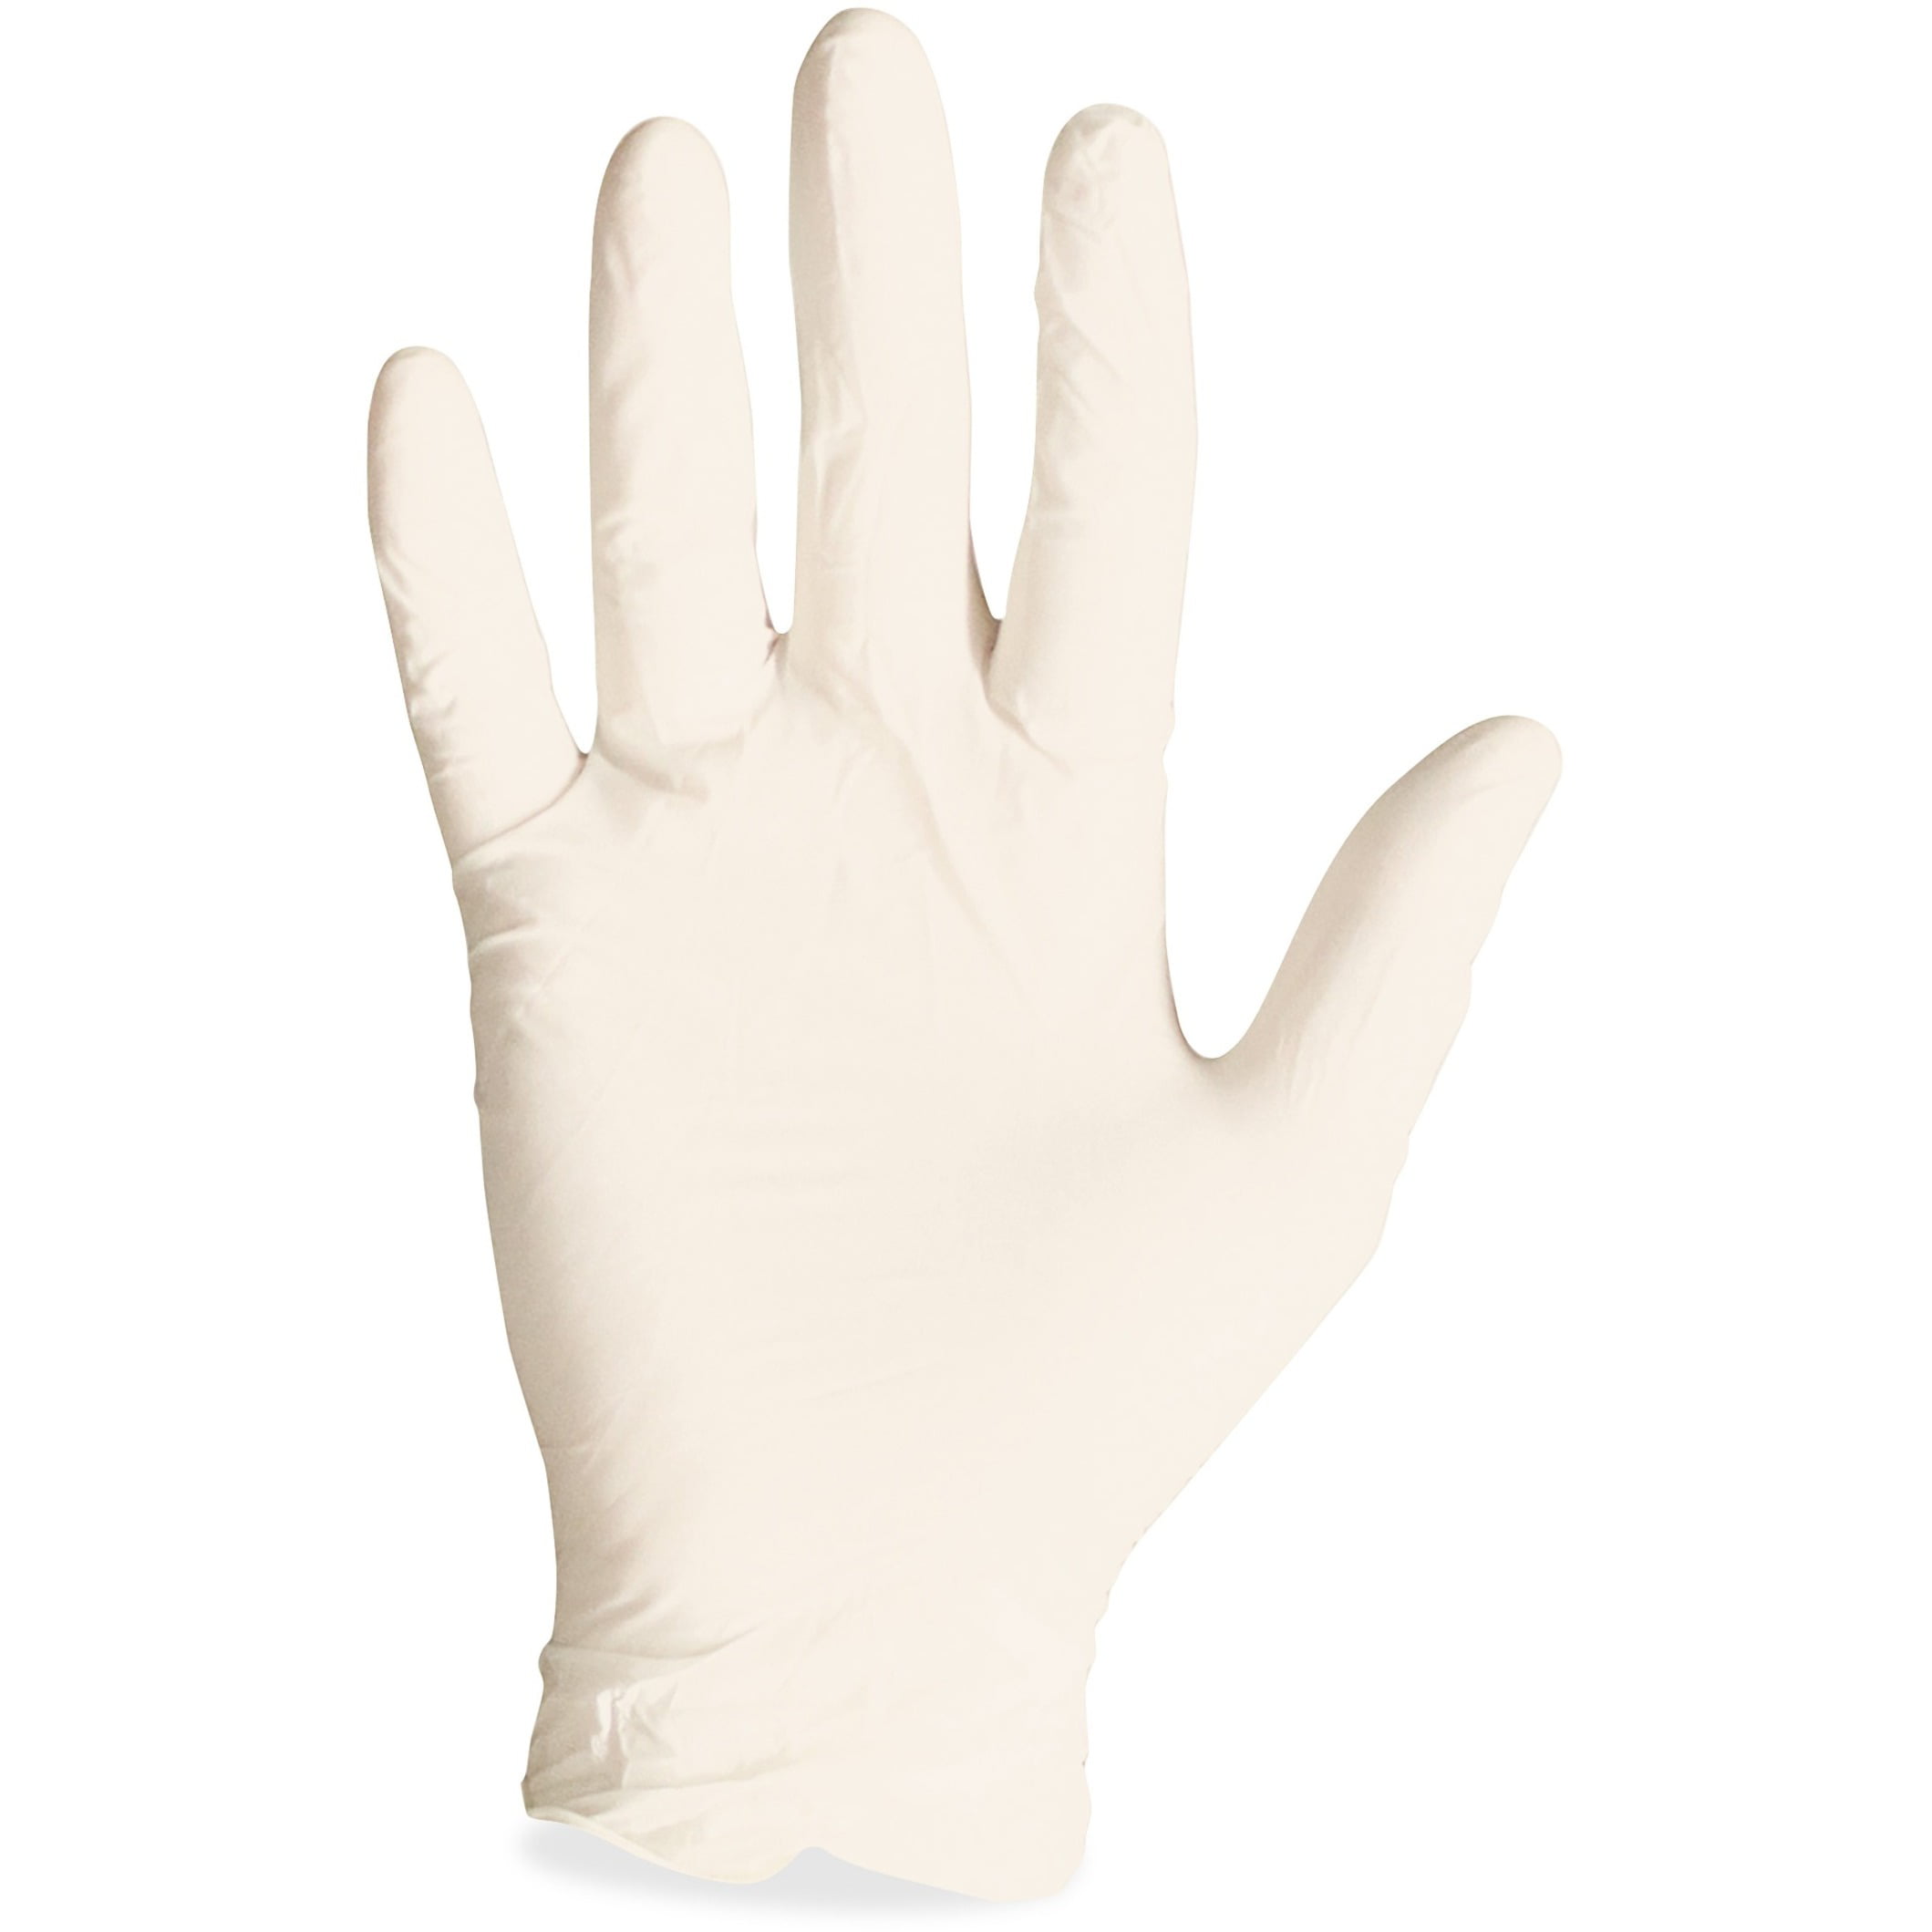 150 x Multi Purpose Transparent Plastic Safety Gloves Disposable Hairdressing UK 